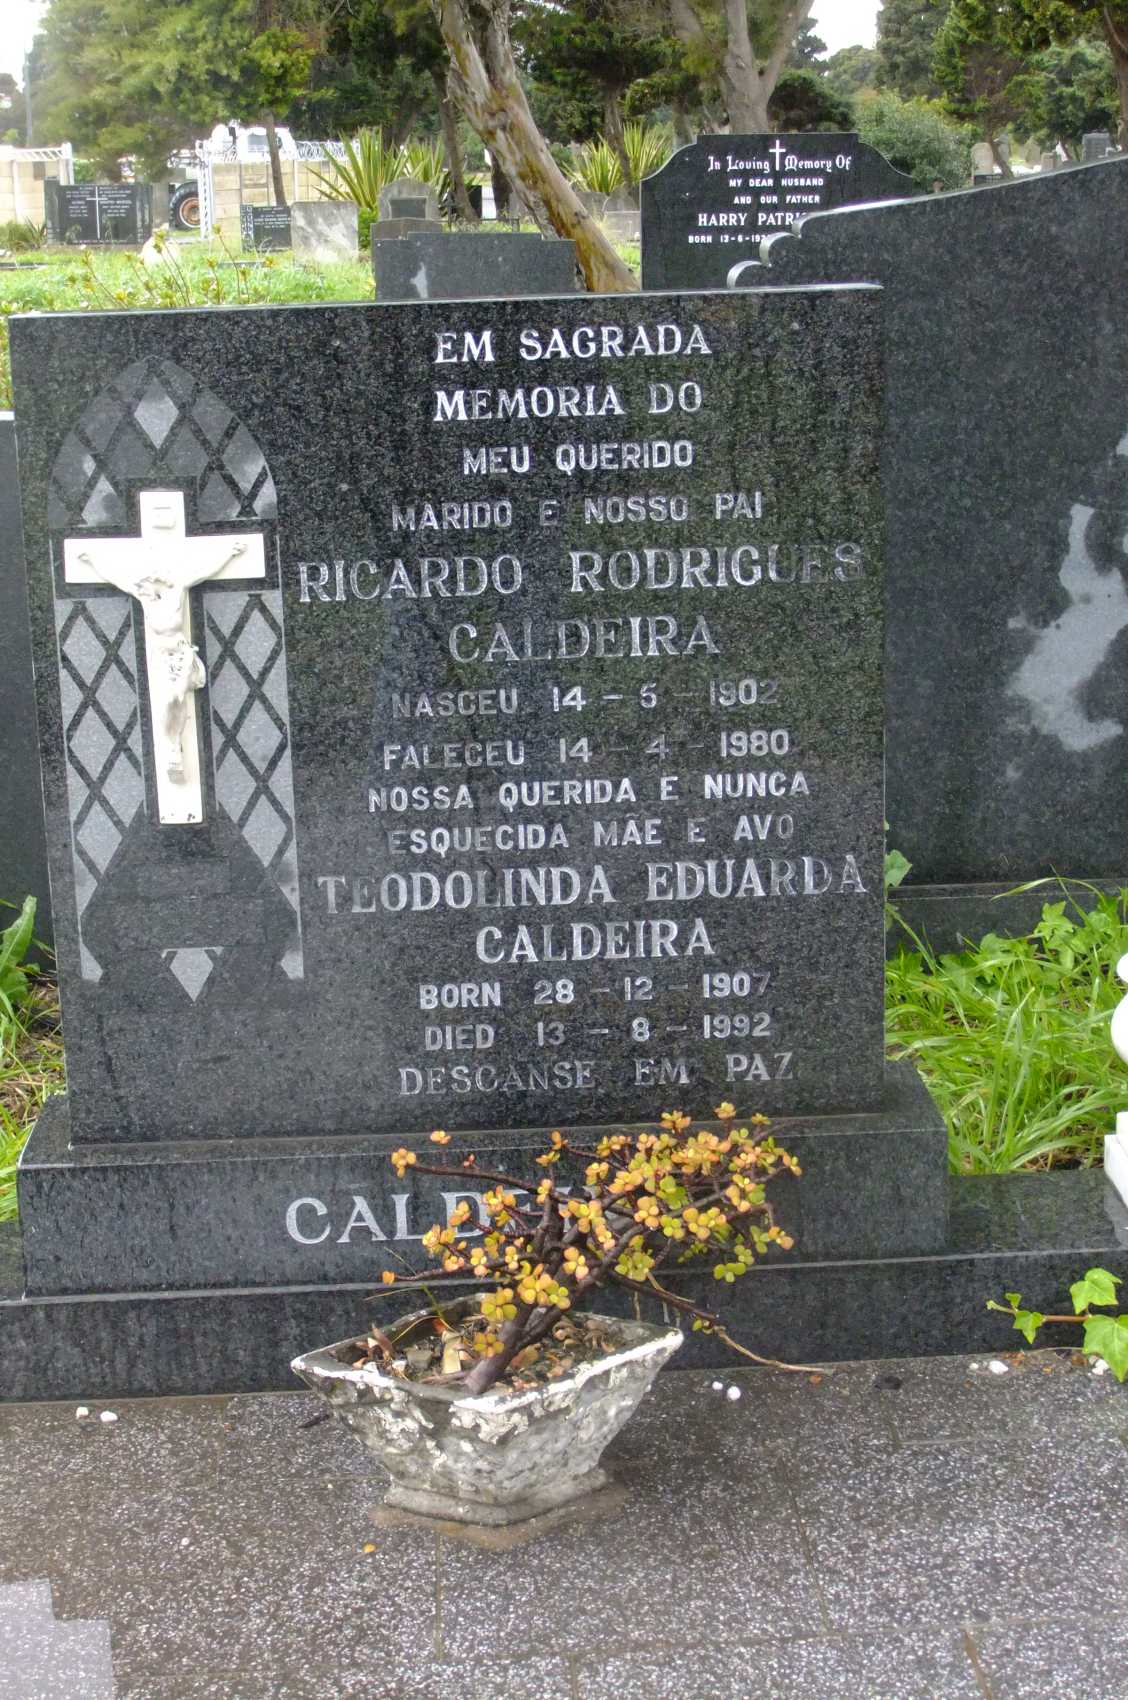 CALDEIRA Ricardo Rodrigues 1902-1980 & Teodolinda Eduarda 1907-1992